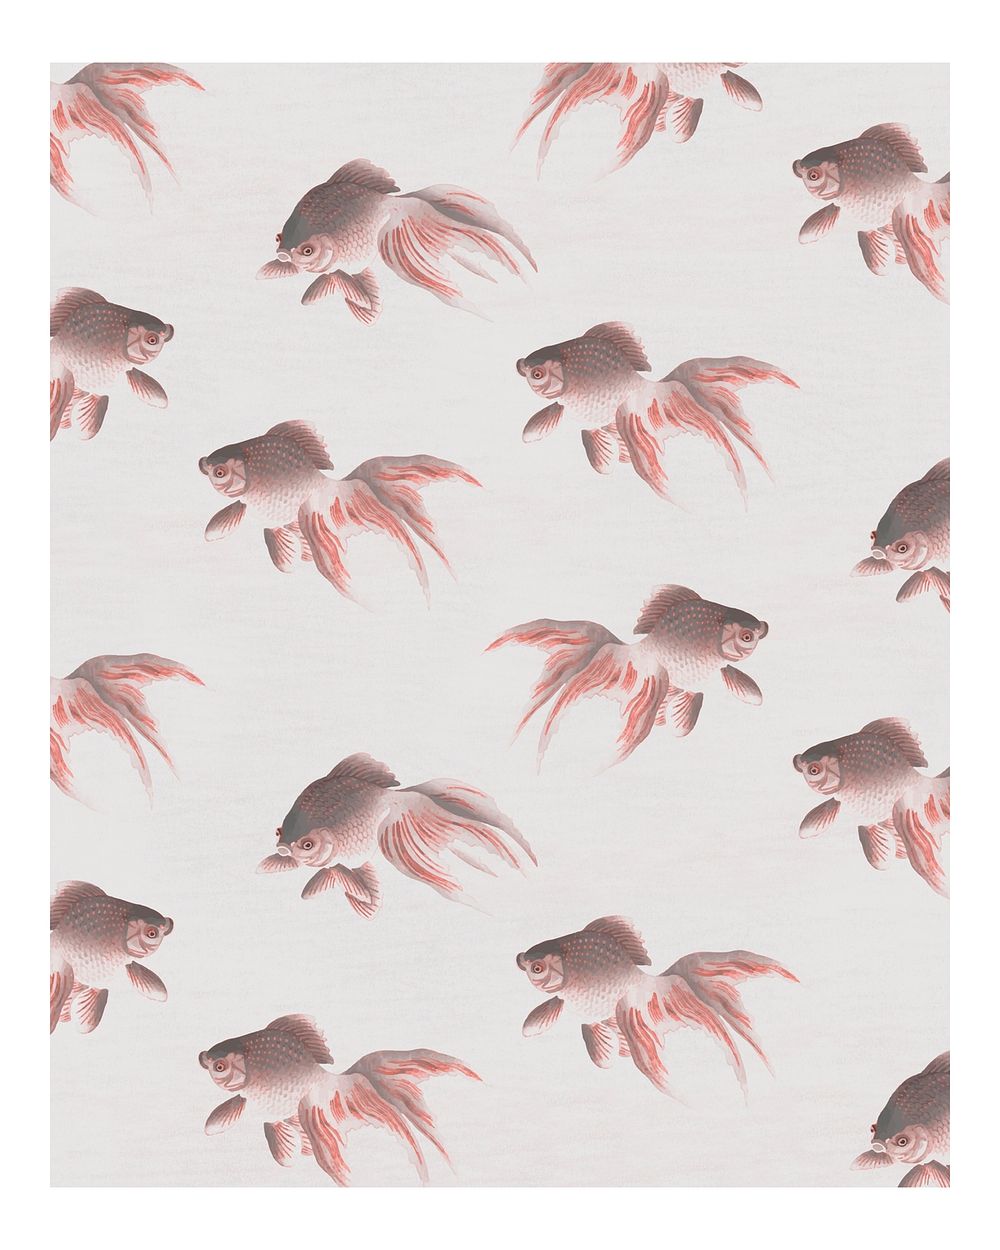 Veiltail goldfish pattern vintage illustration wall art print and poster design remix from original artwork. Digitally…